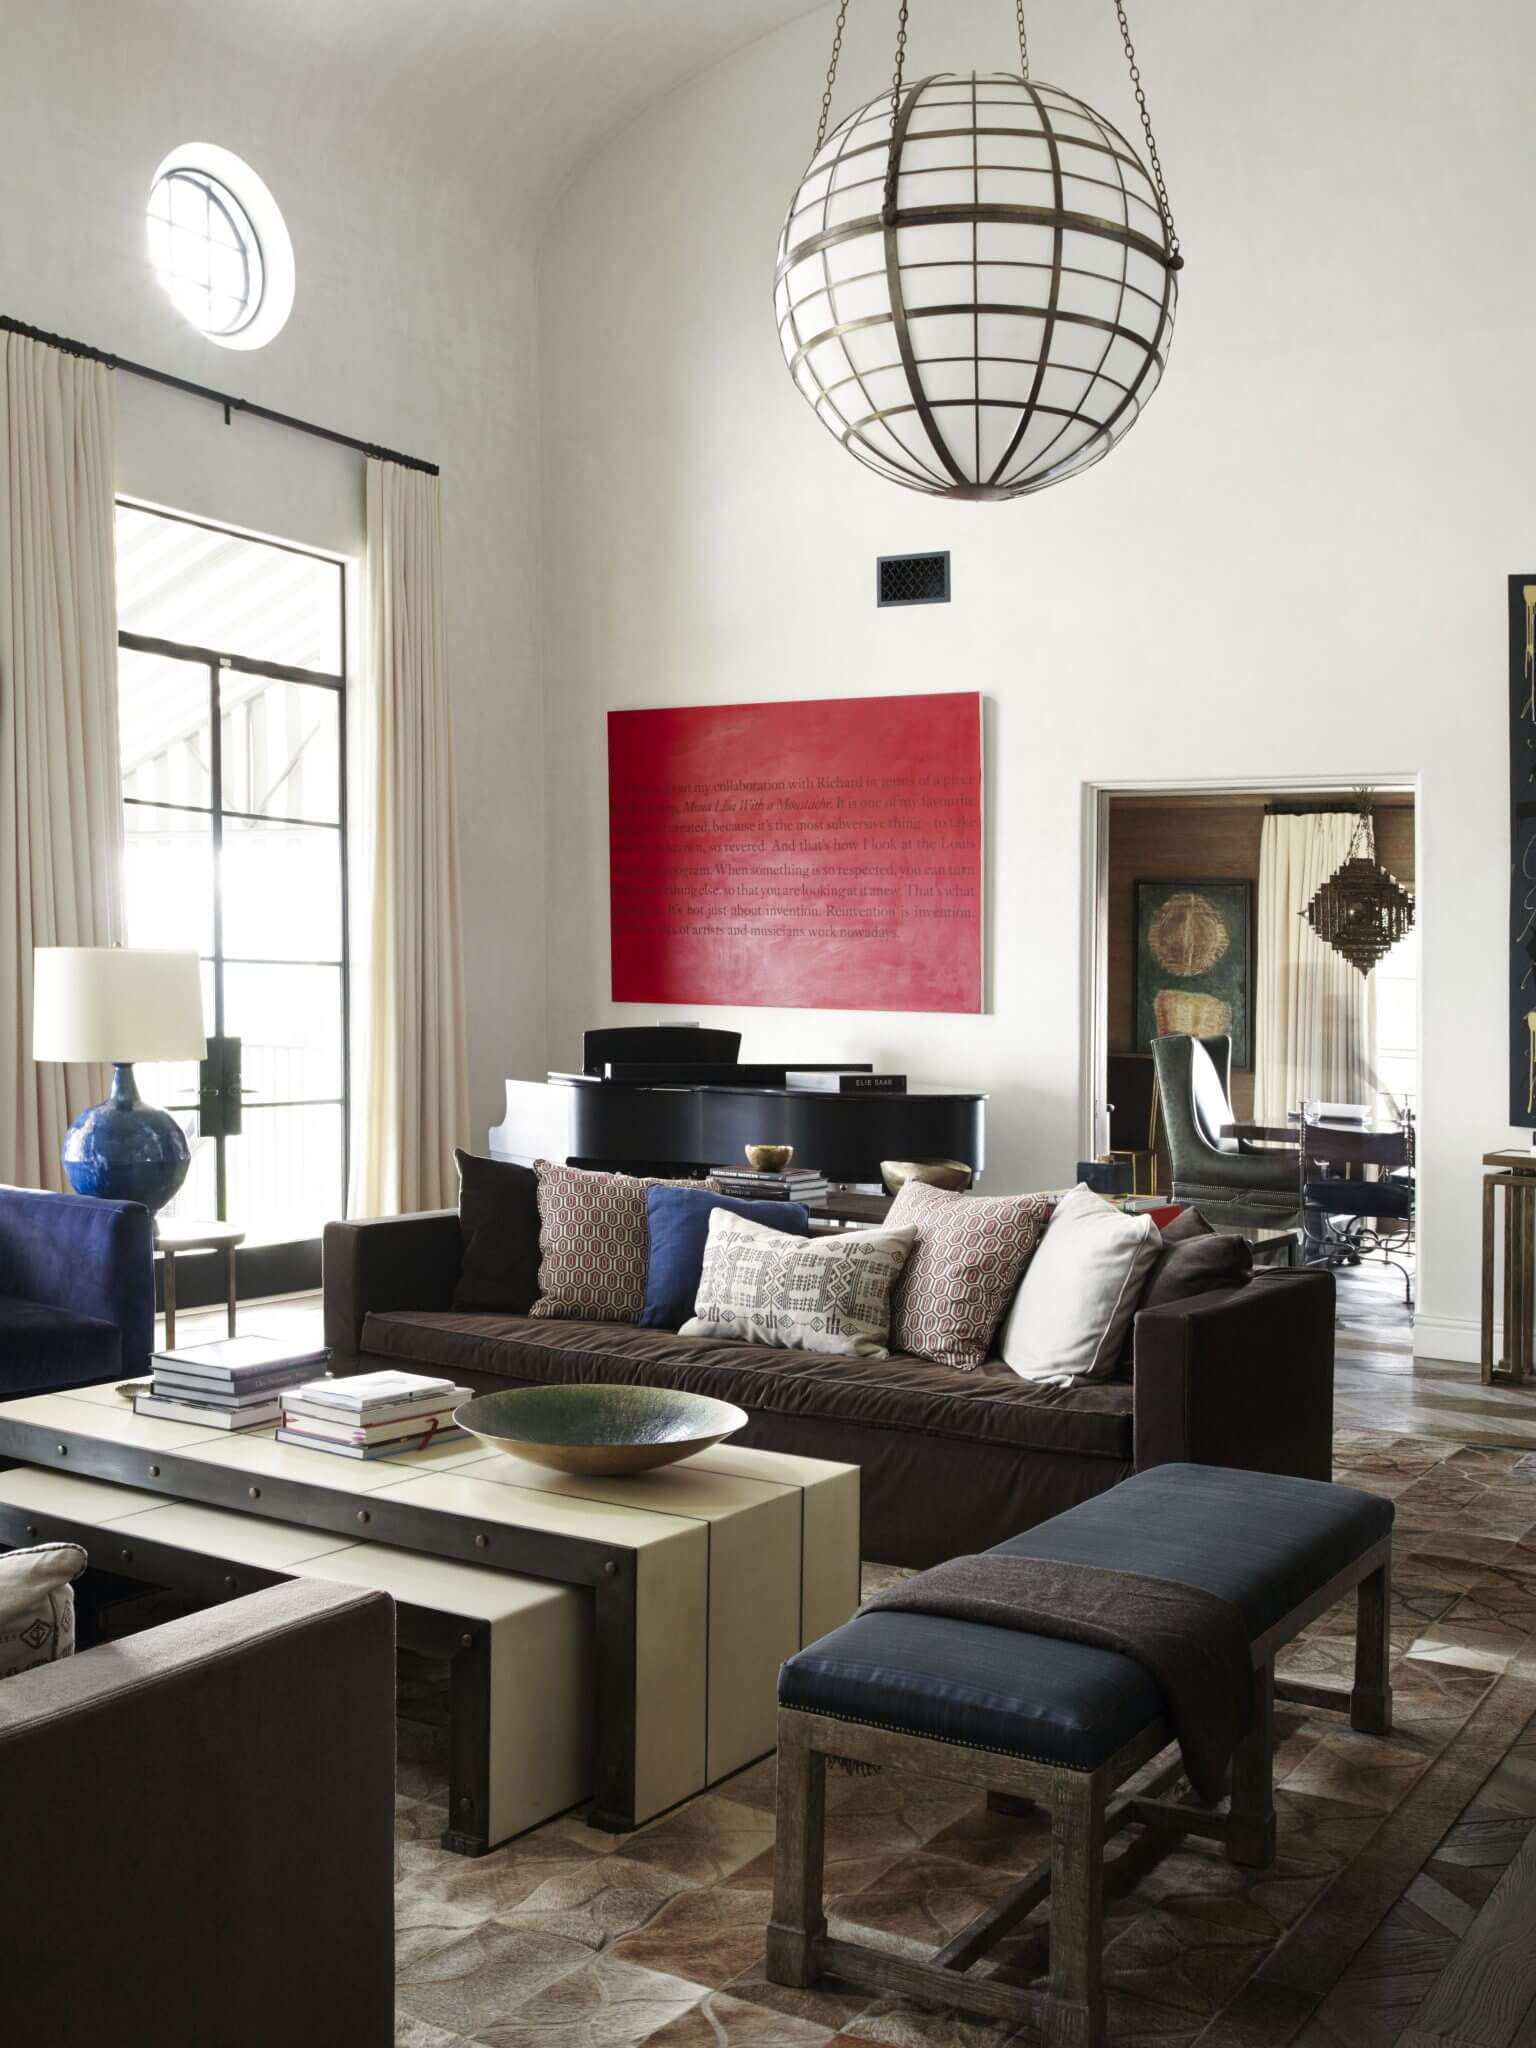 Popular Colors For Living Room
 25 Best Living Room Color Scheme 2018 Interior